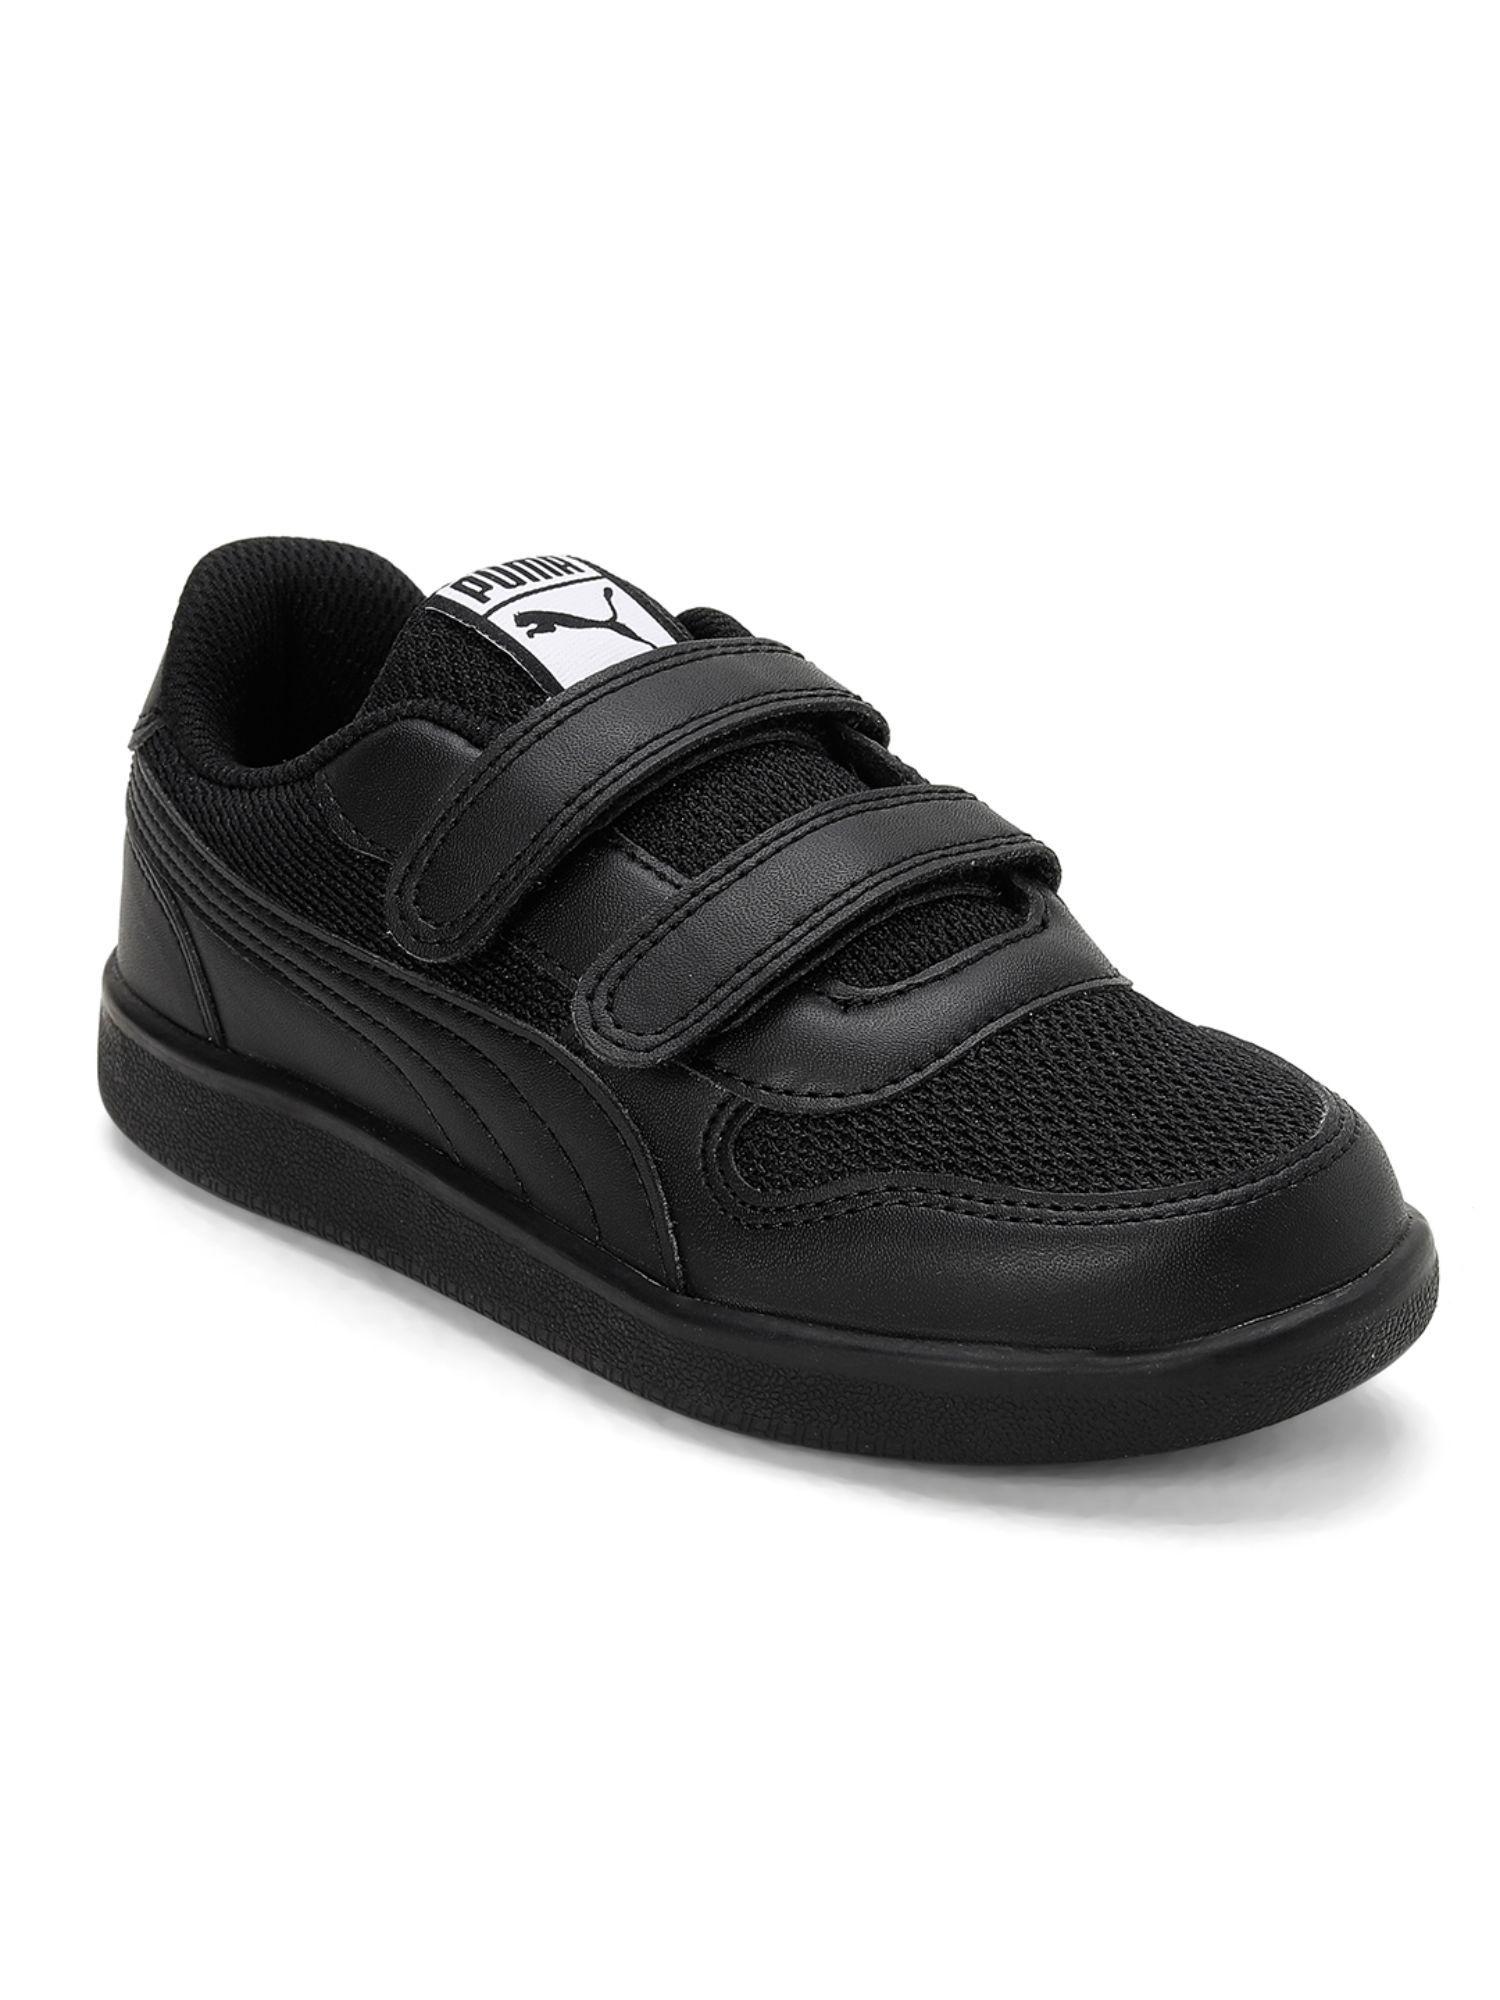 punch comfort junior kids black casual shoes